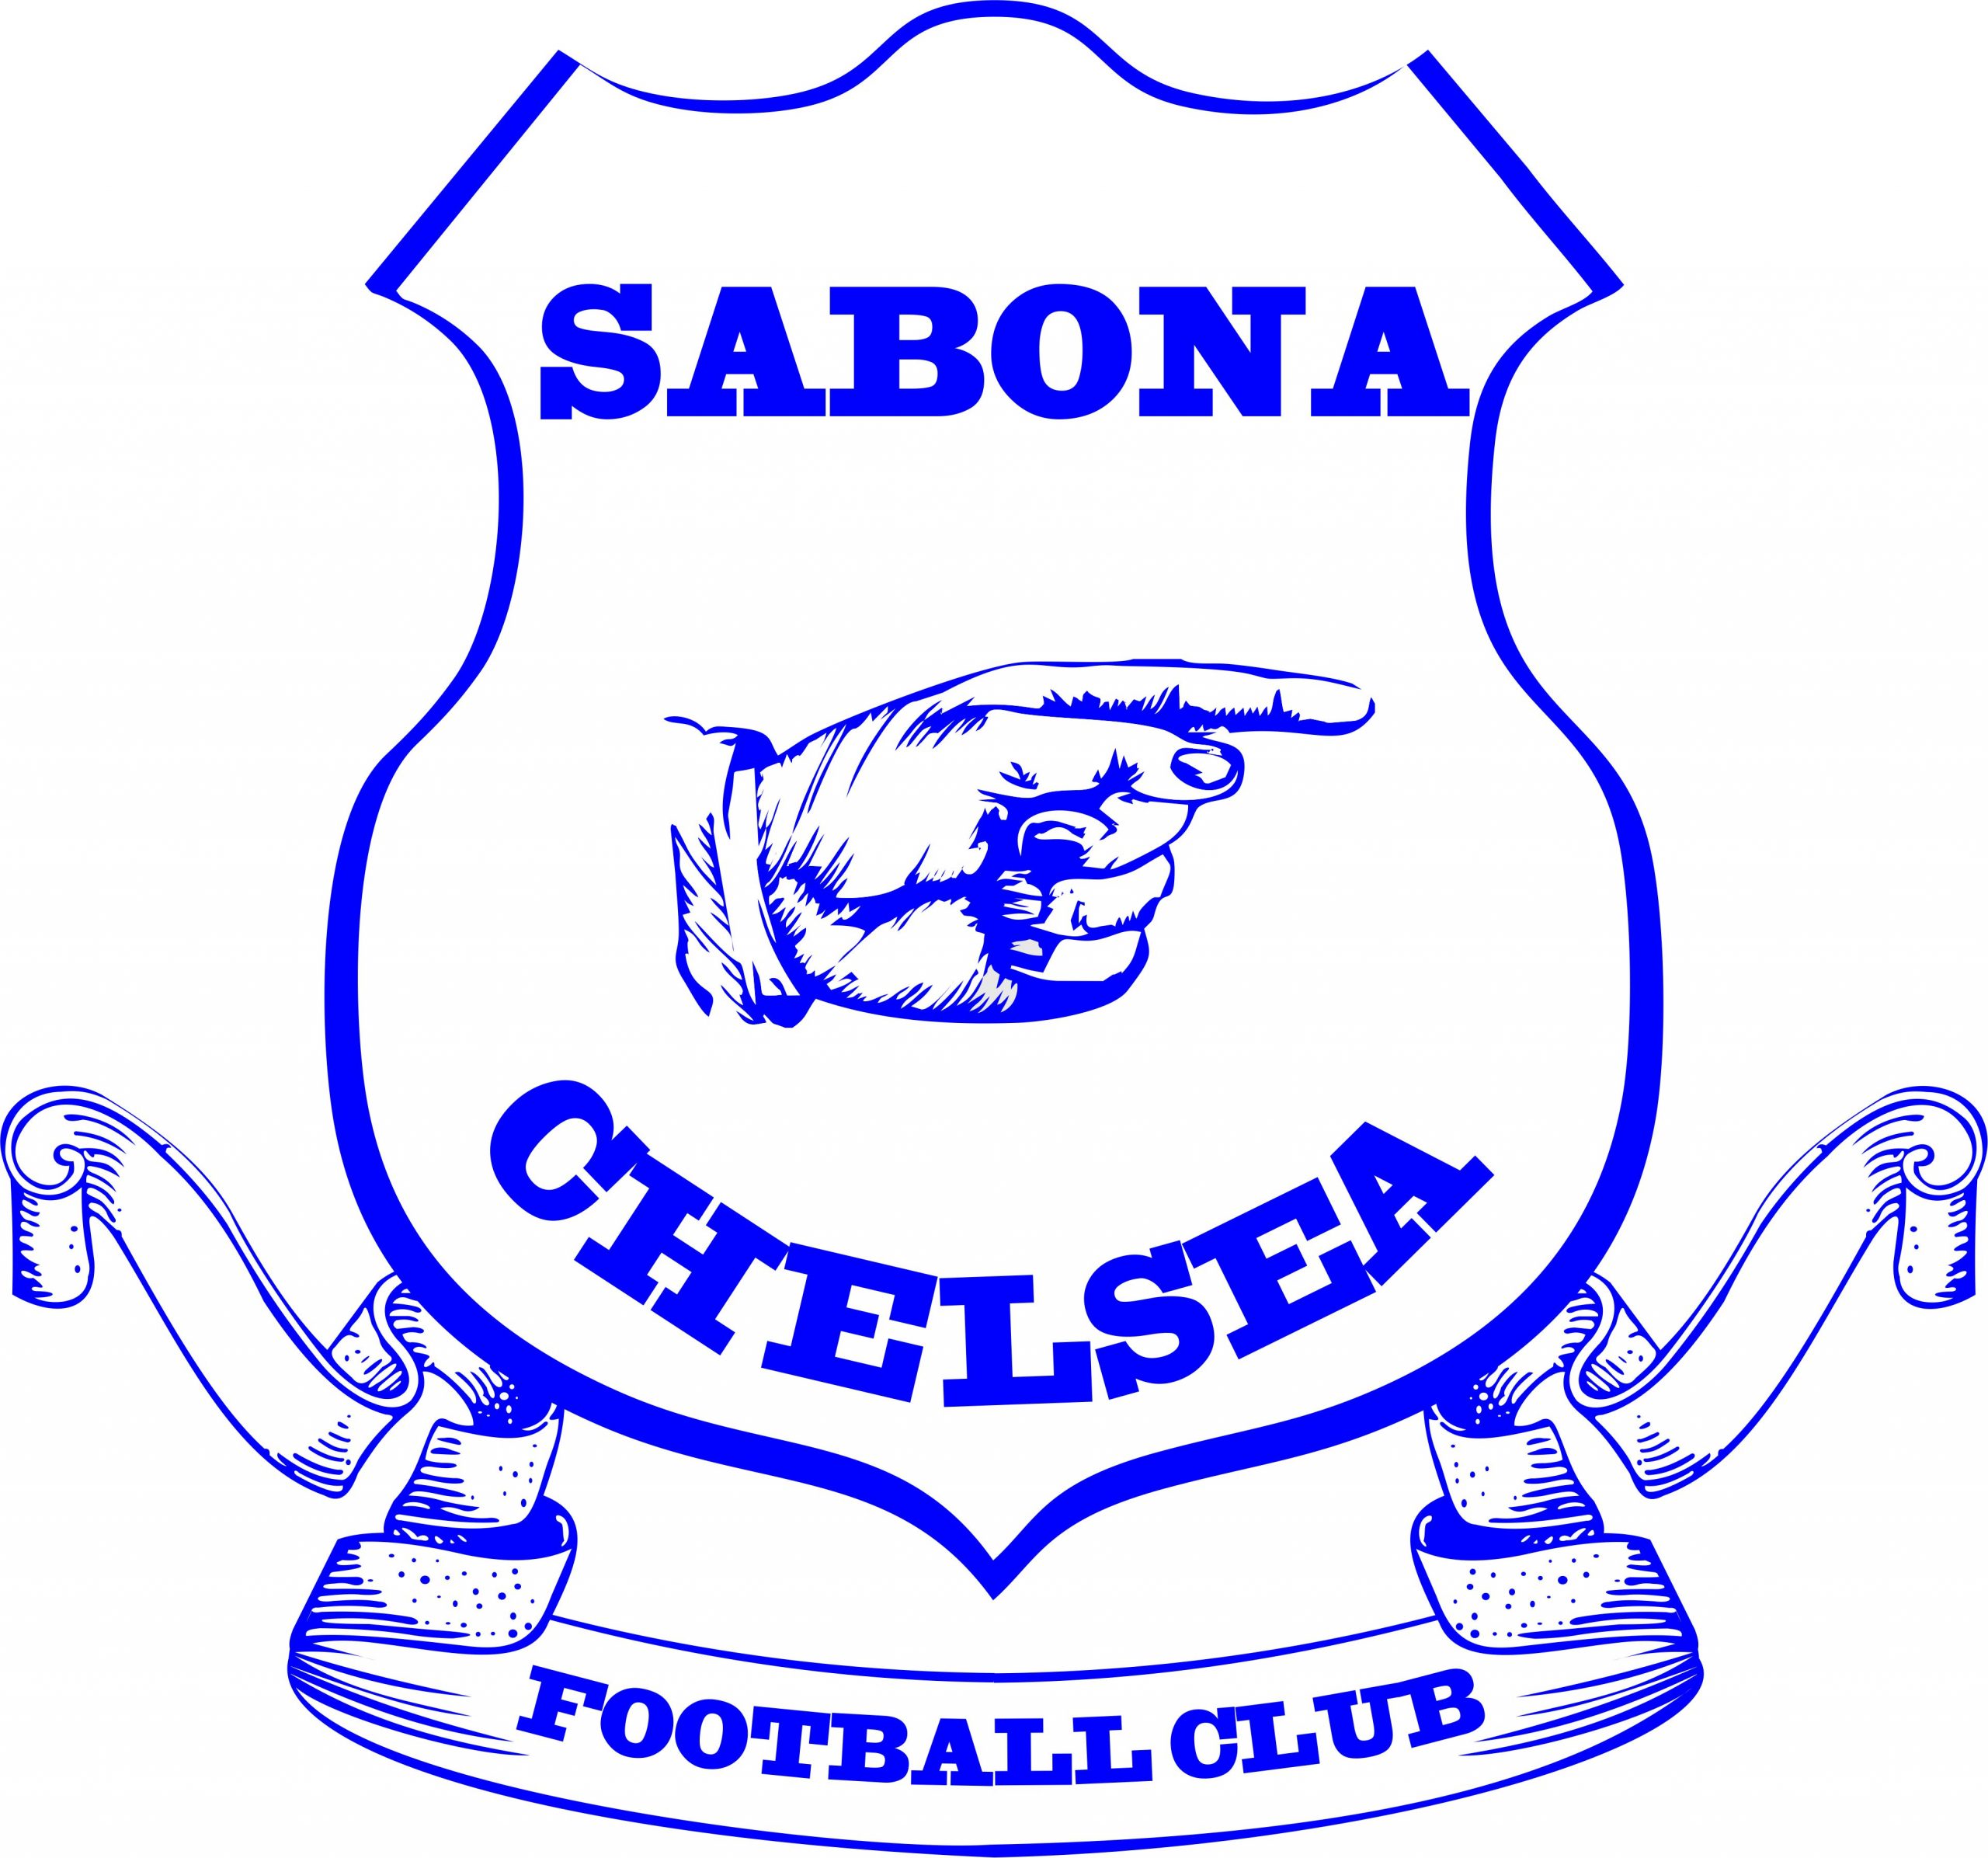 Sabona Chelsea Football Club (SL)